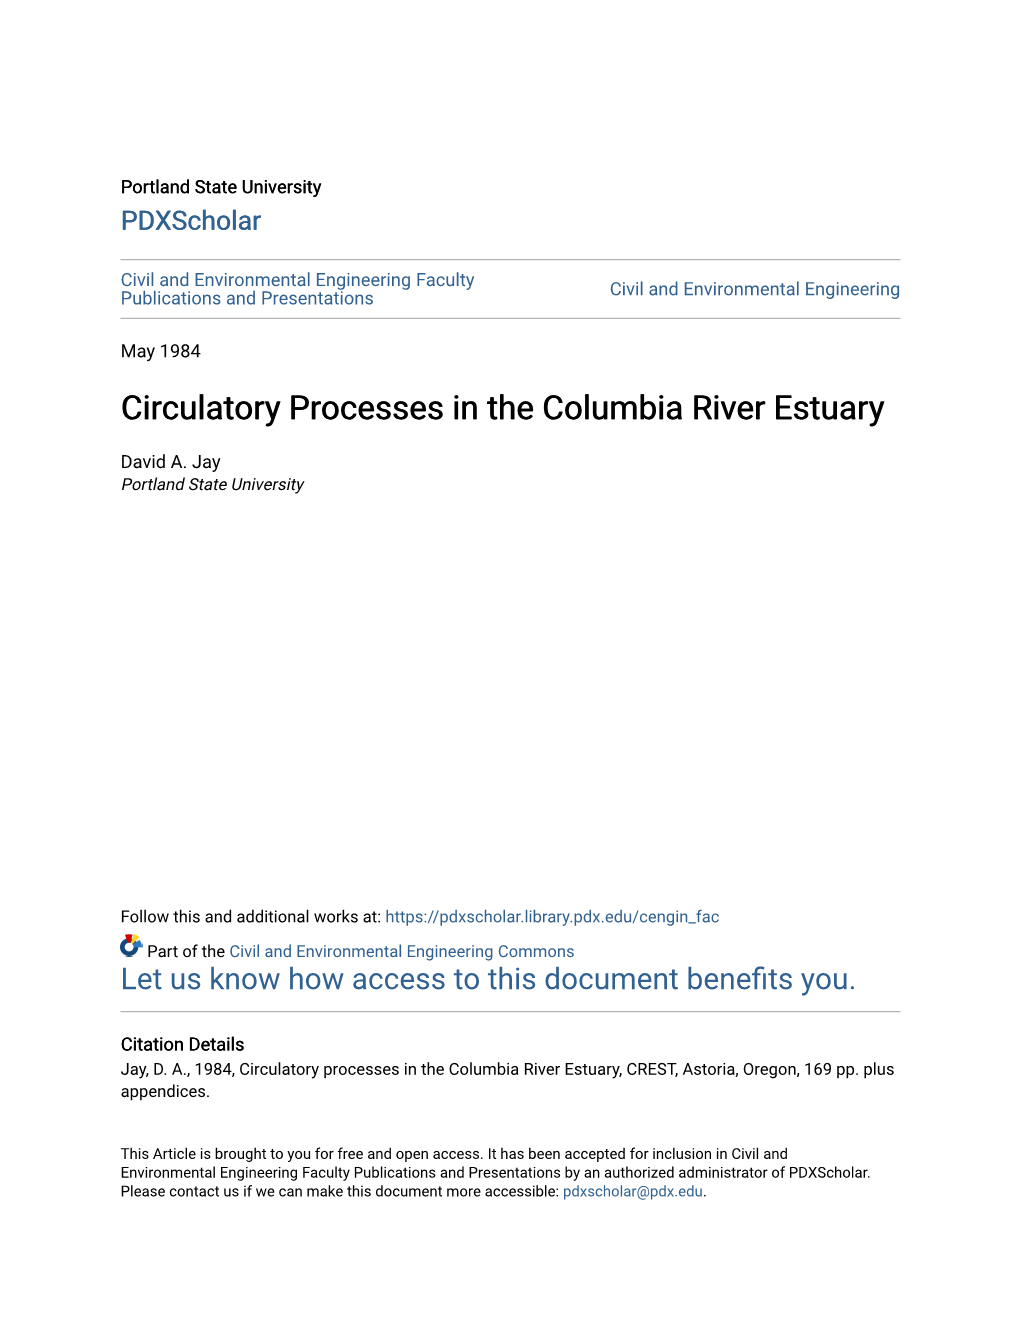 Circulatory Processes in the Columbia River Estuary